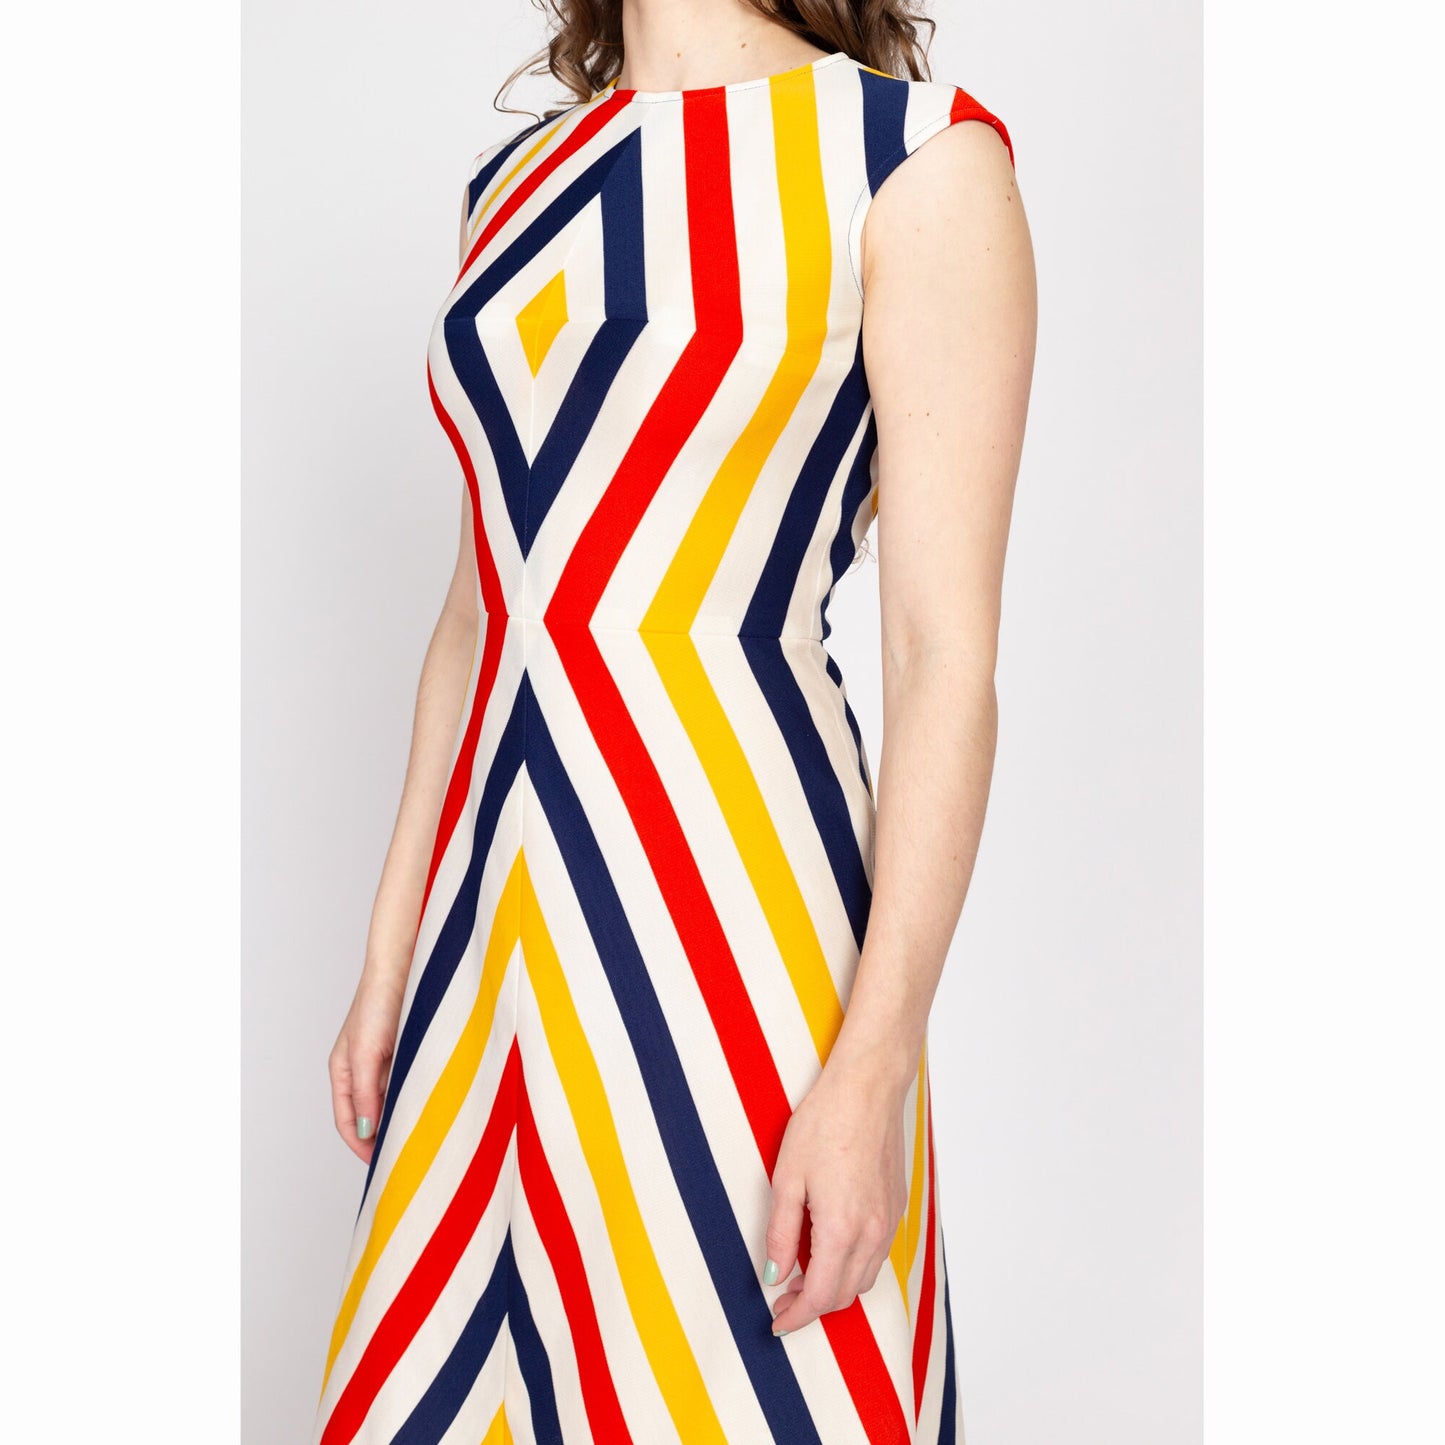 Small 70s Chevron Striped Midi Dress | Vintage Julie Miller Colorful A Line Retro Sleeveless Dress